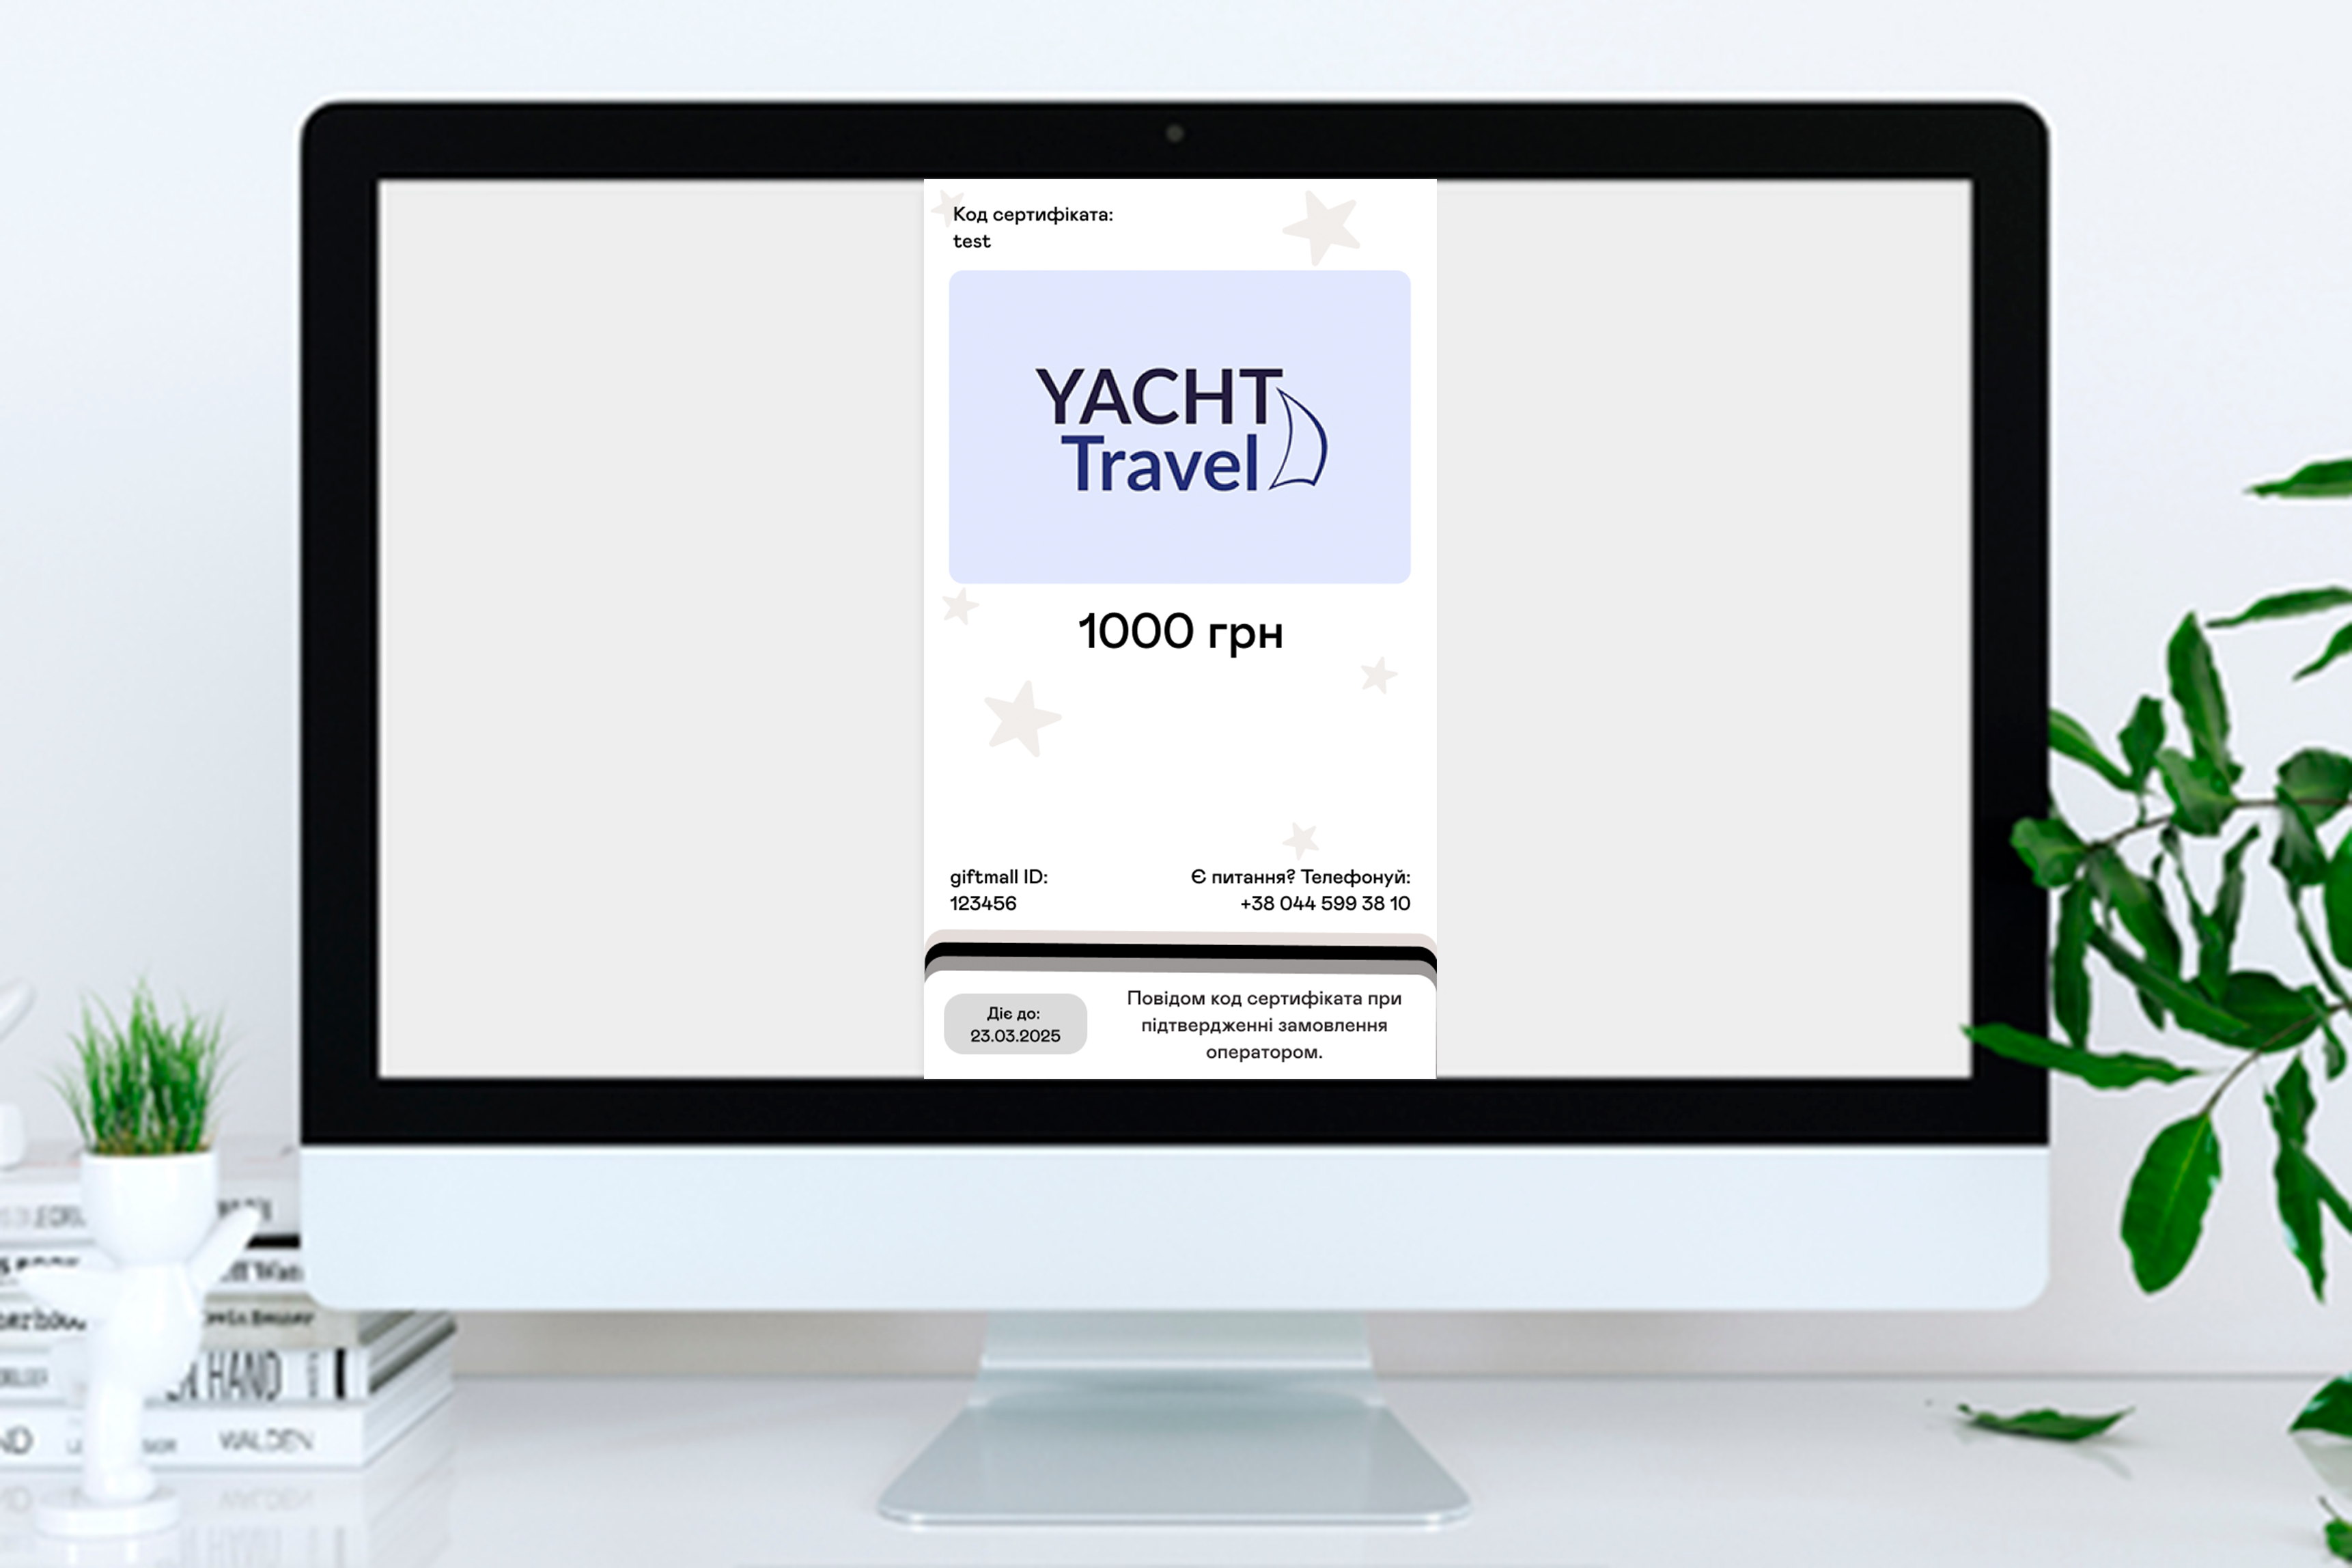 Yacht Travel Sailing School